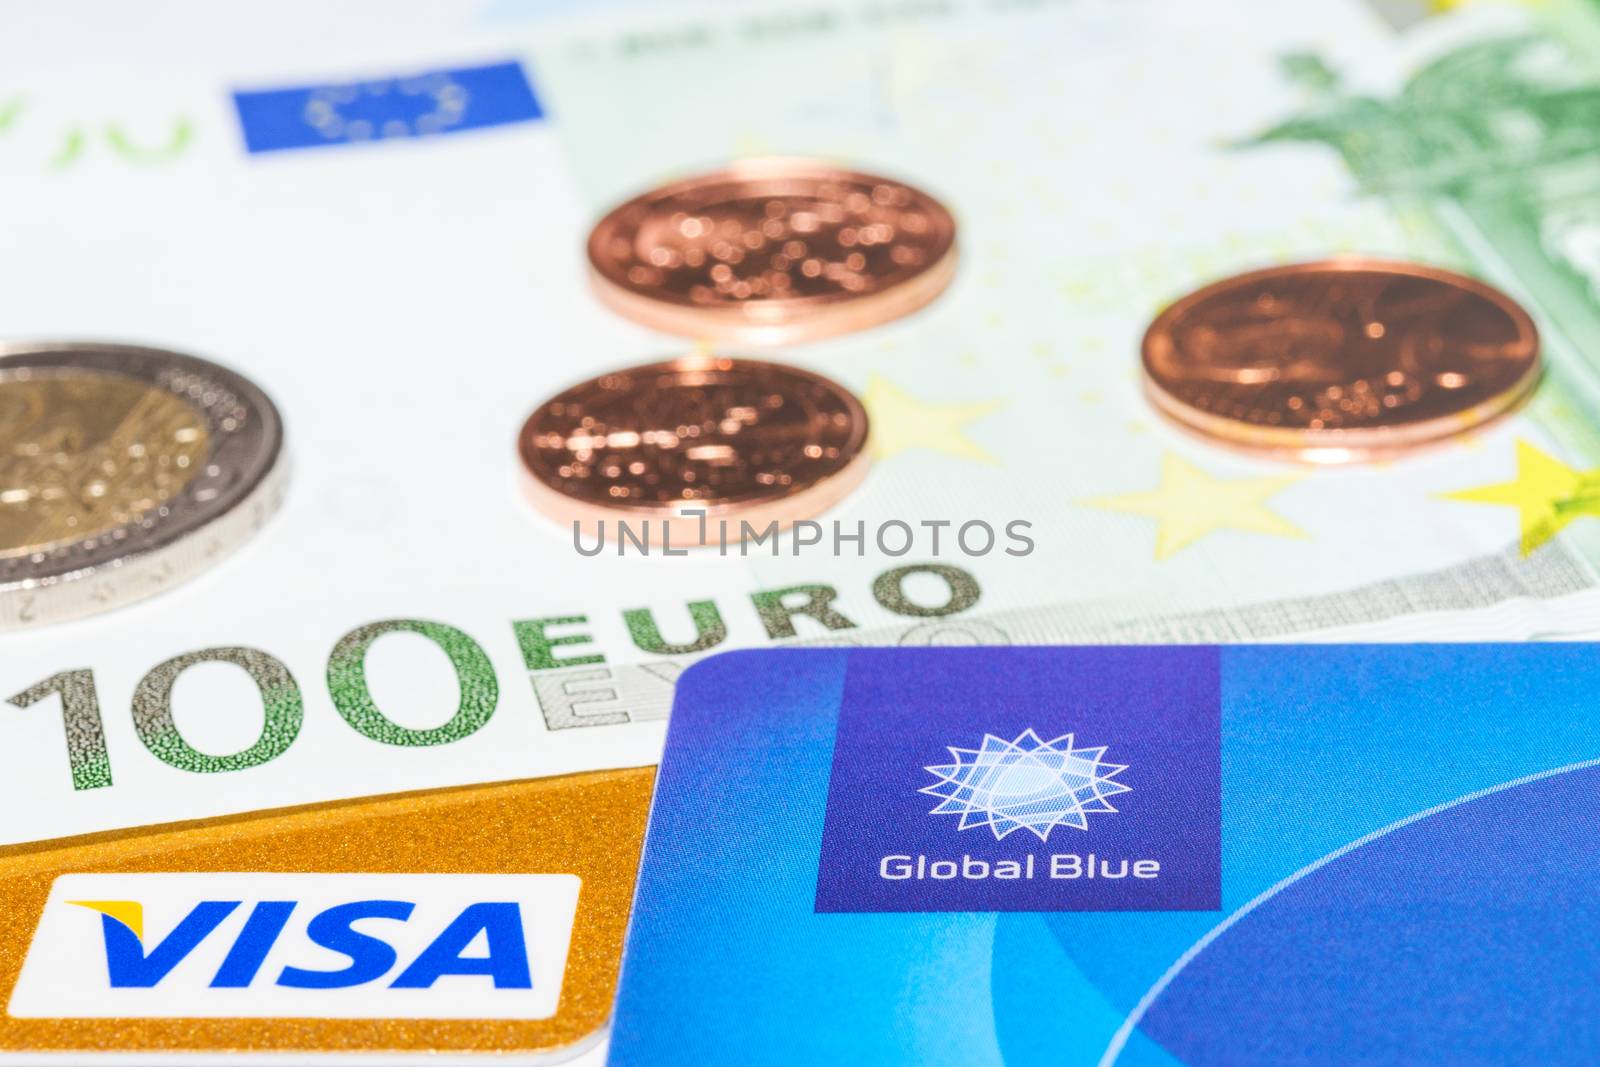 "Global Blue", "Visa" credit card and cash money by servickuz